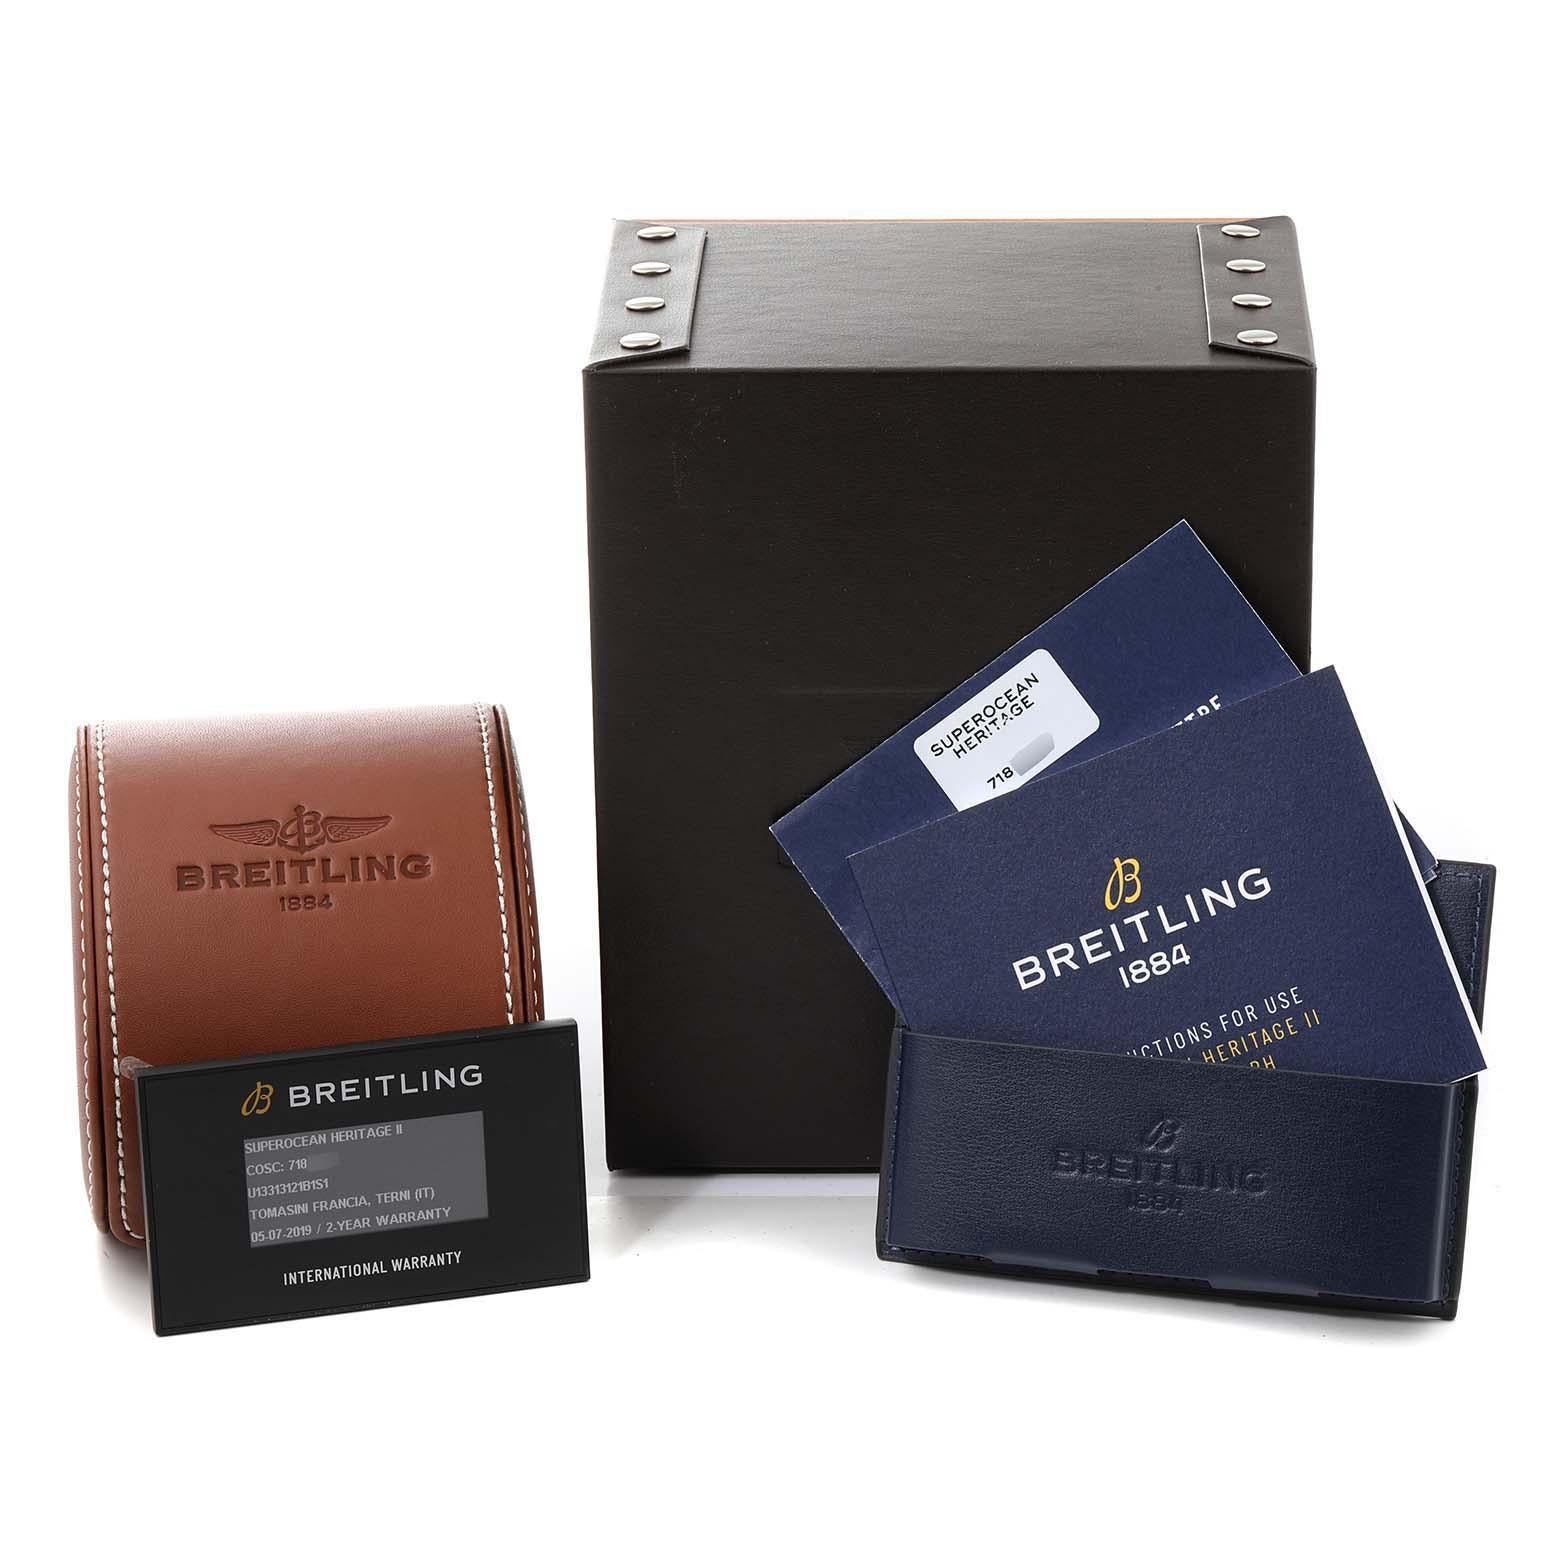 Breitling Superocean Heritage II Stahl-Roségold-Uhr U13313 Box Card im Angebot 6